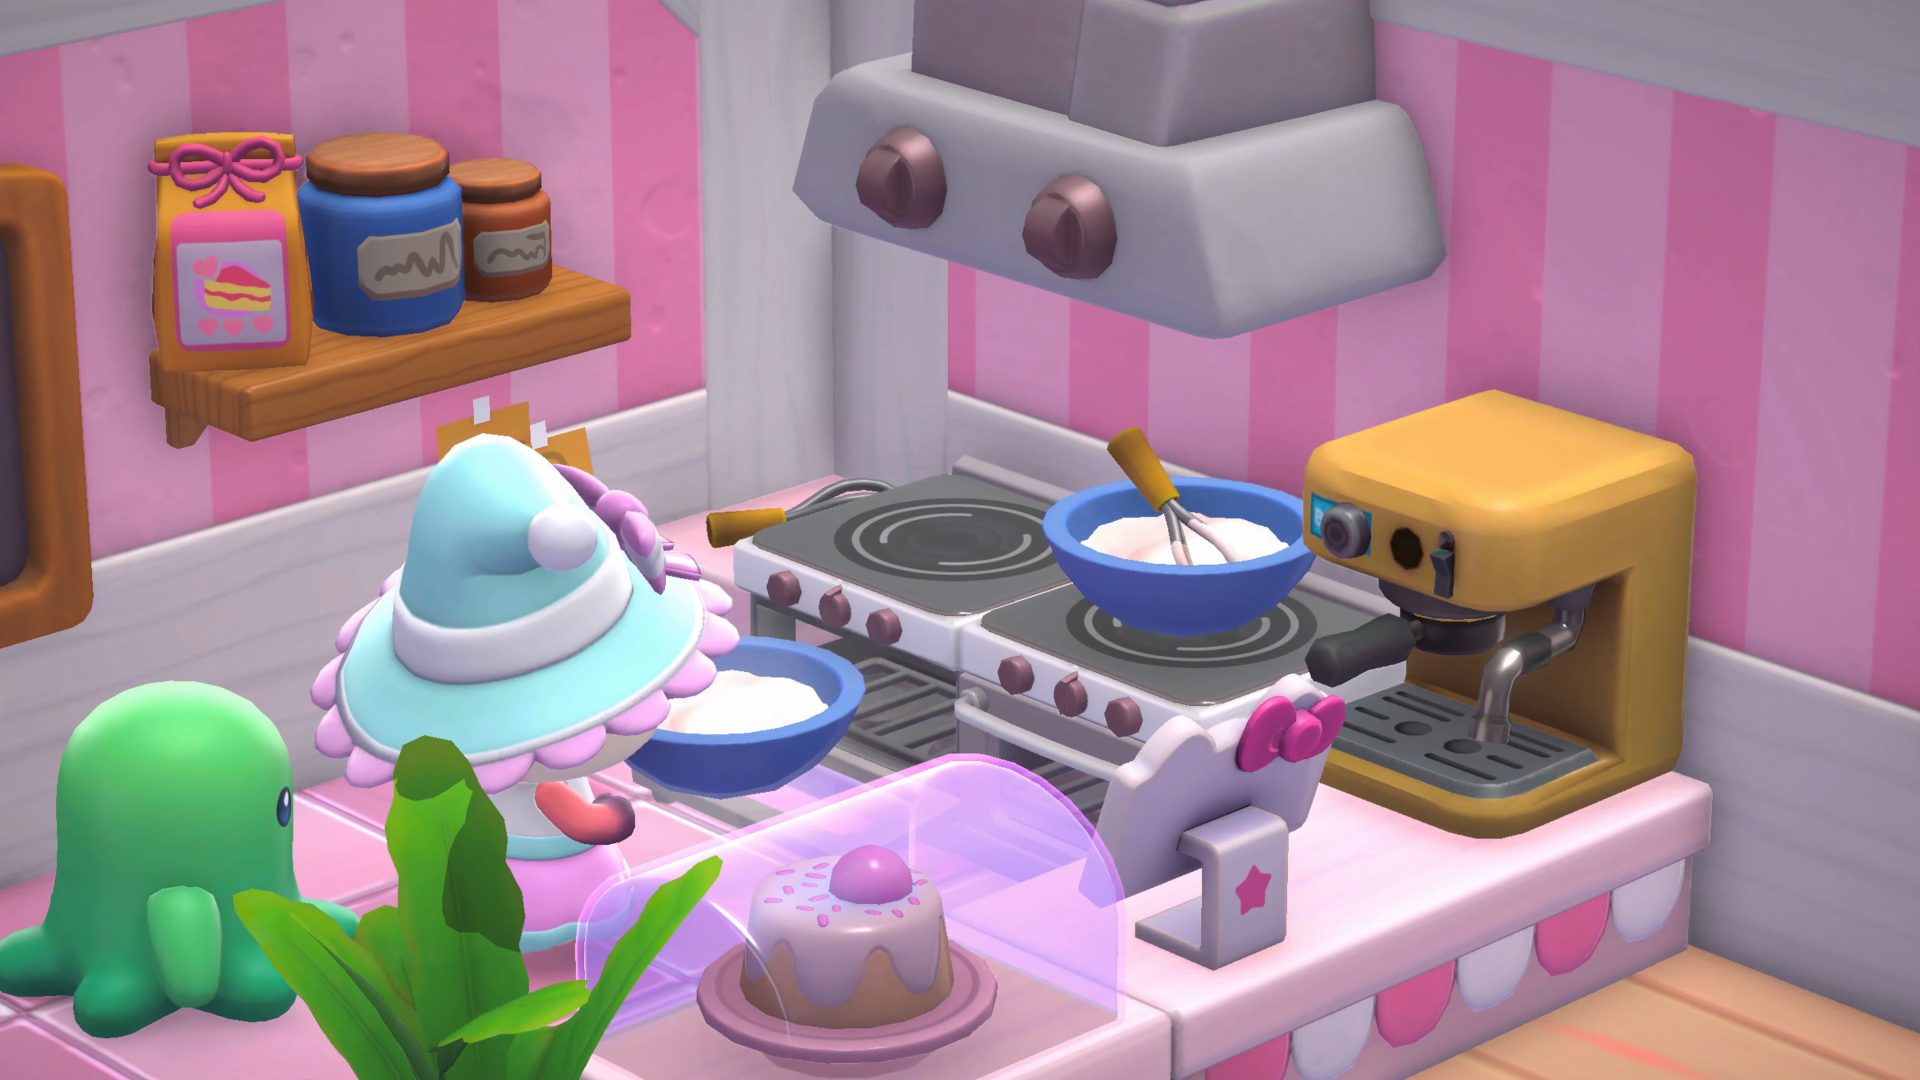 Baking in Hello Kitty's cafe in Hello Kitty Island Adventure